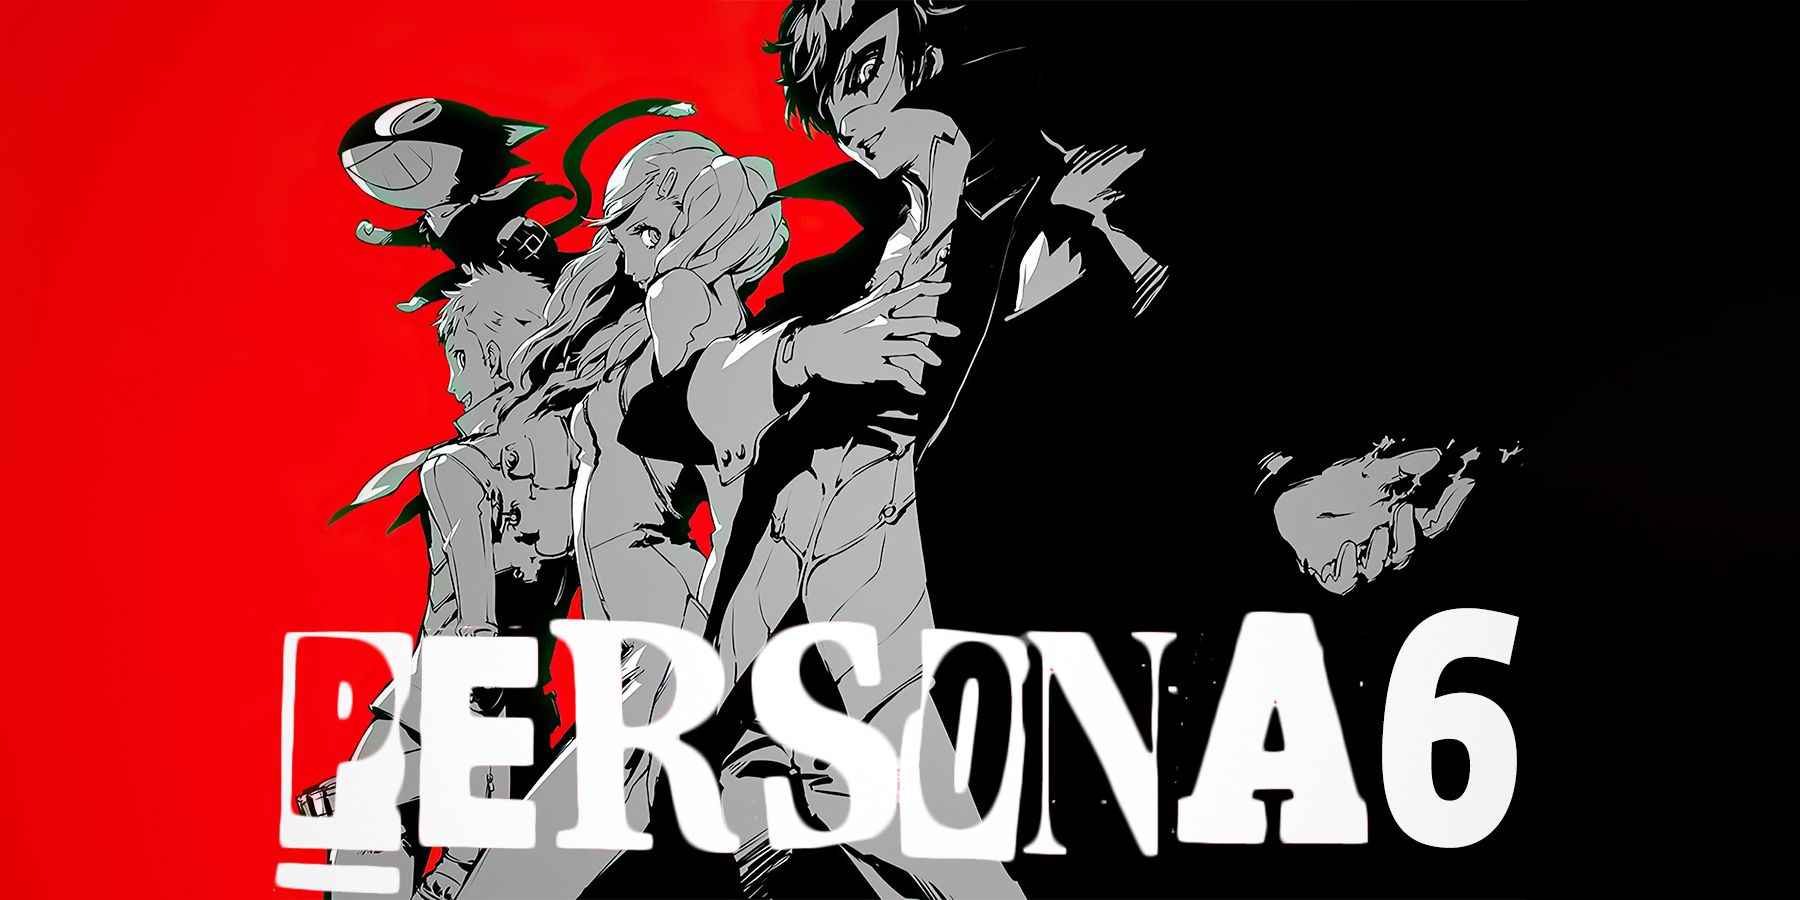 Persona 6 mockup logo on Persona 5 party red-black-gray artwork